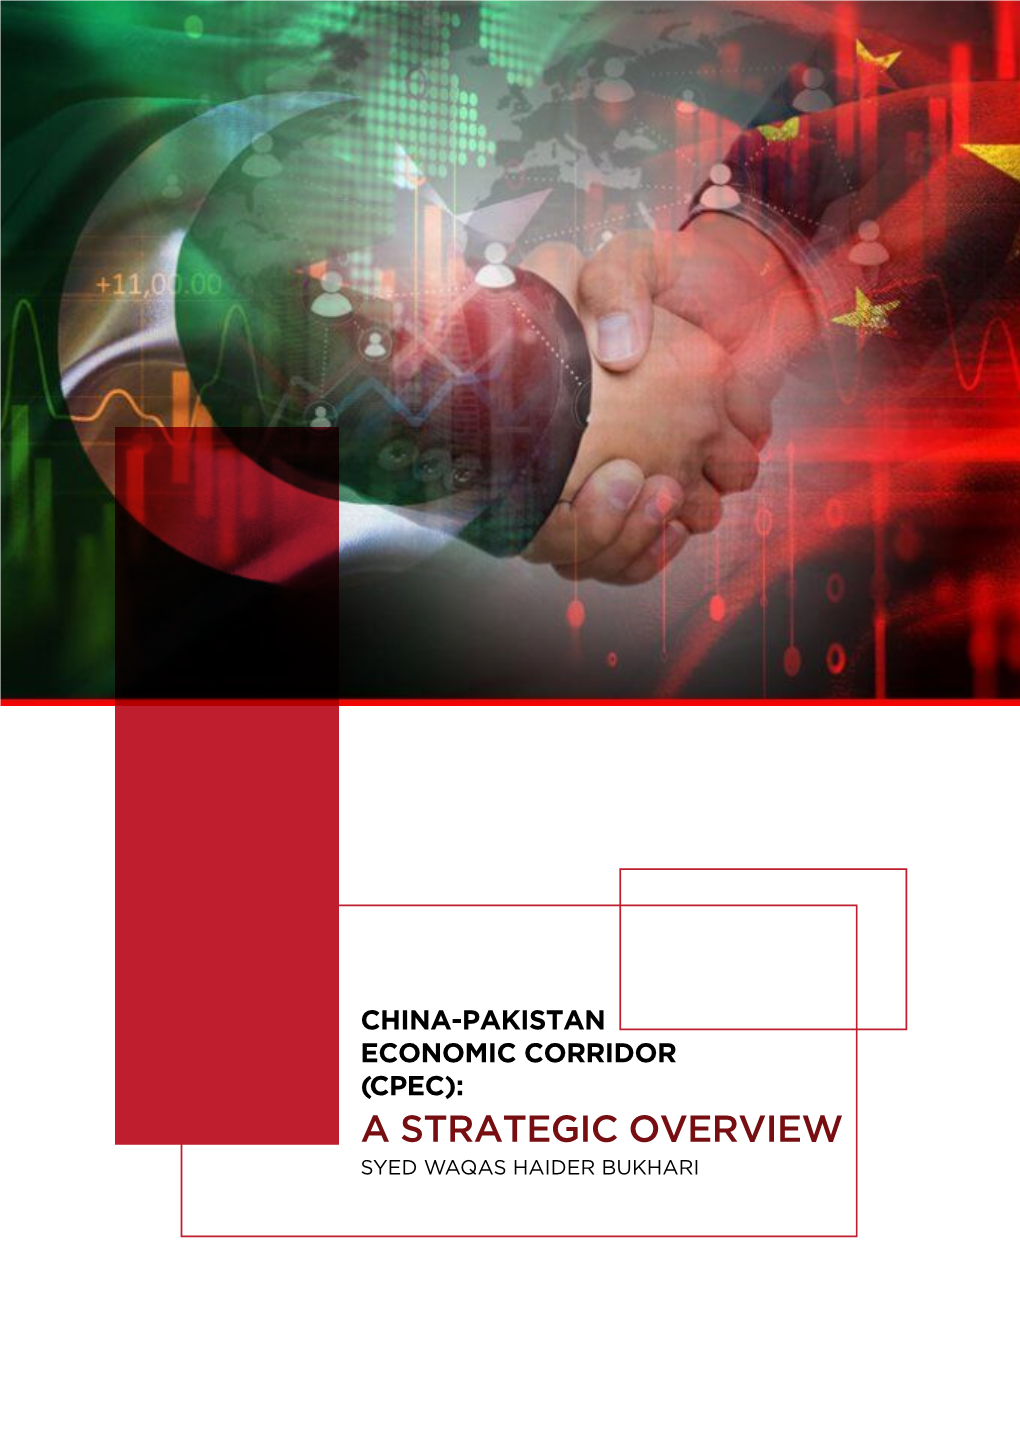 China-Pakistan Economic Corridor (CPEC) a Strategic Overview